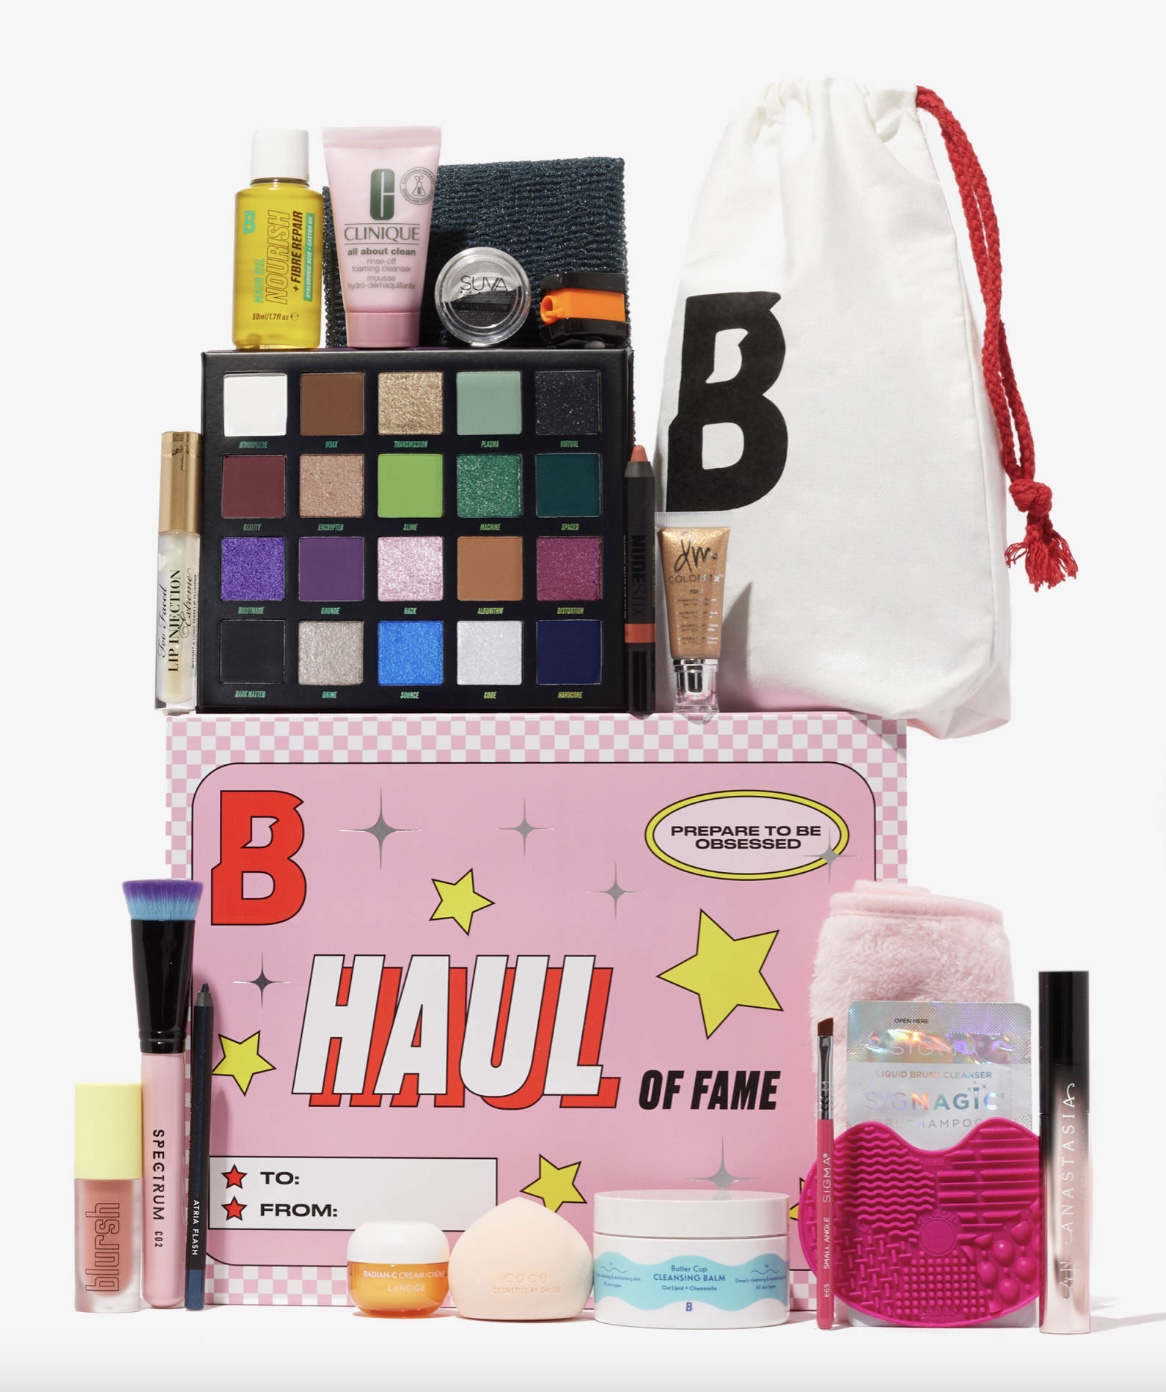 Coffret de Noël 2022 de Beautybay Haul of Fame Box